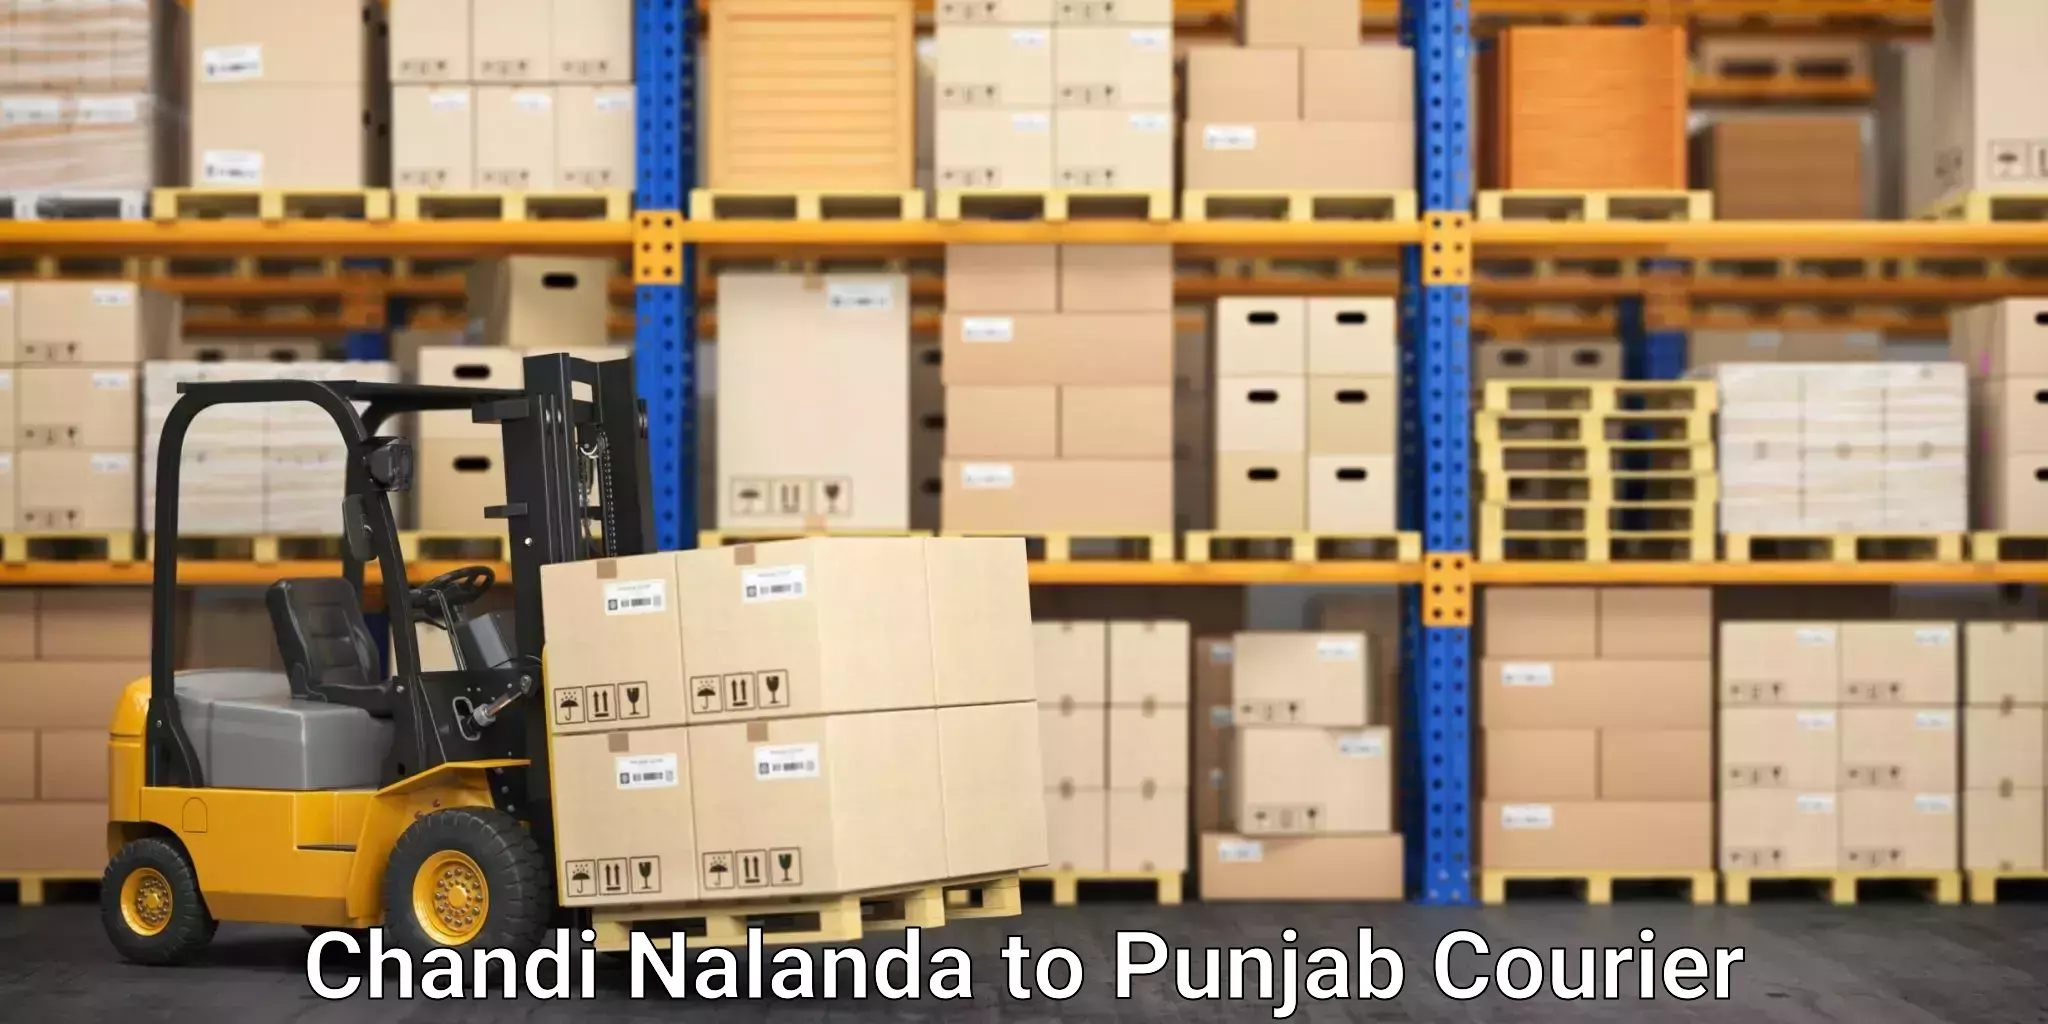 Household goods movers and packers in Chandi Nalanda to Dhilwan